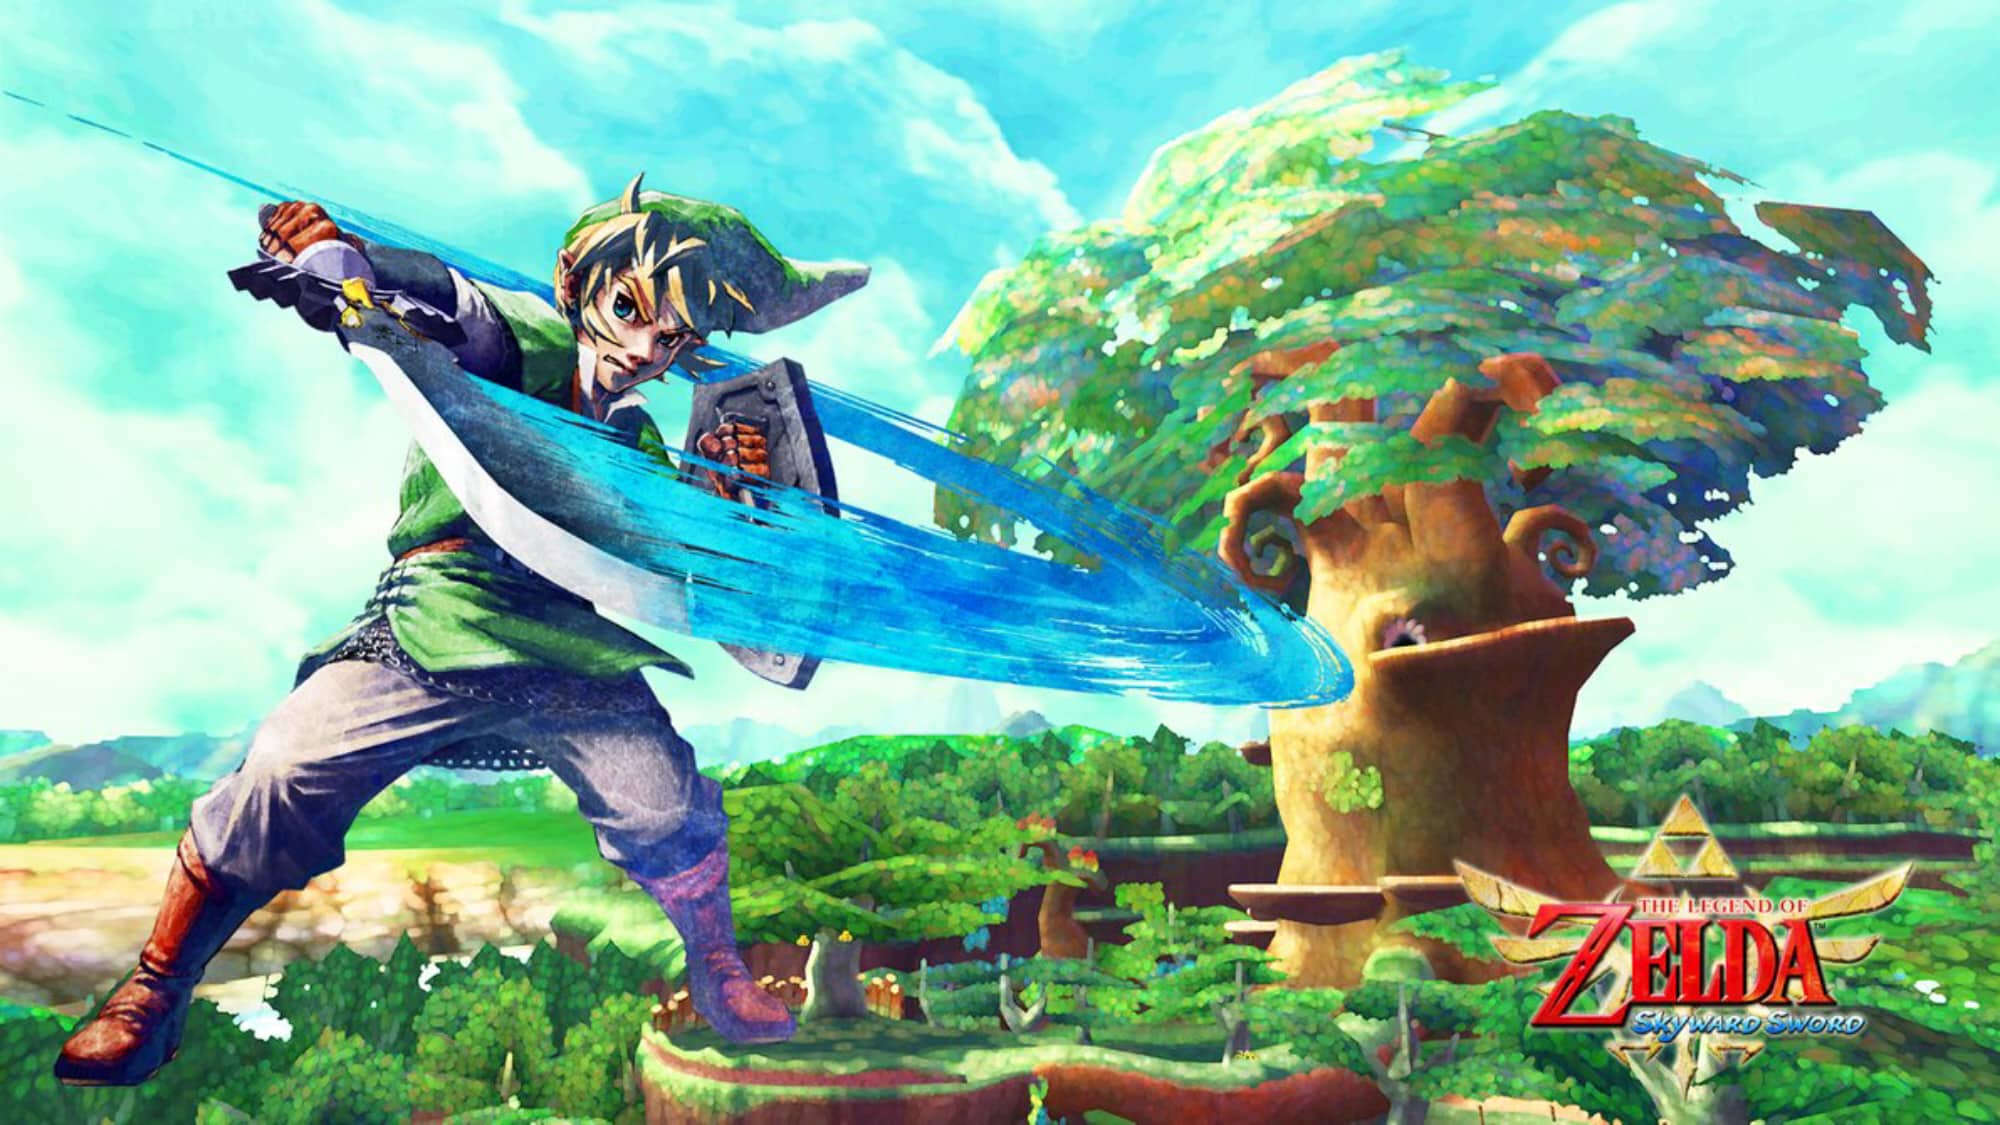 Zelda: Skyward Sword Wallpaper Village